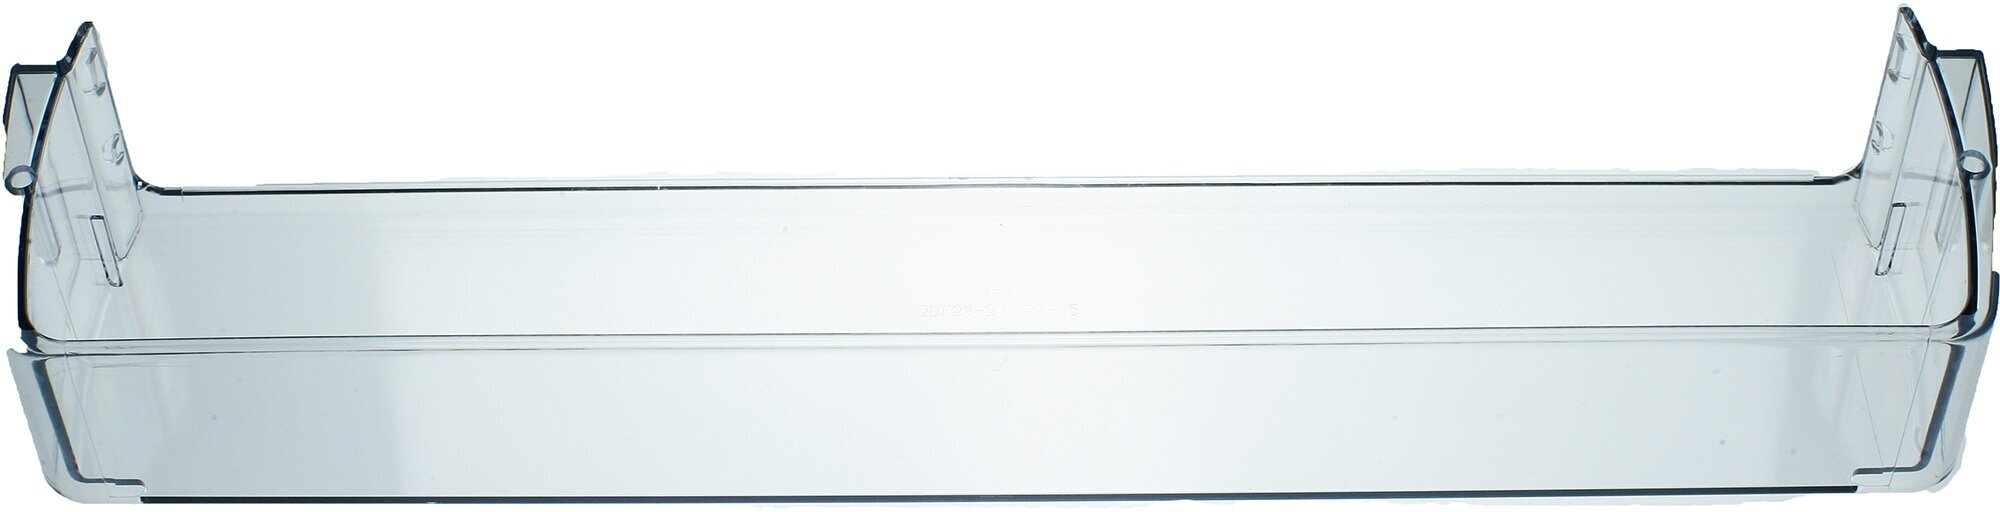 Полка балкон для холодильника Атлант 60 серии 301543105802 прозрачная